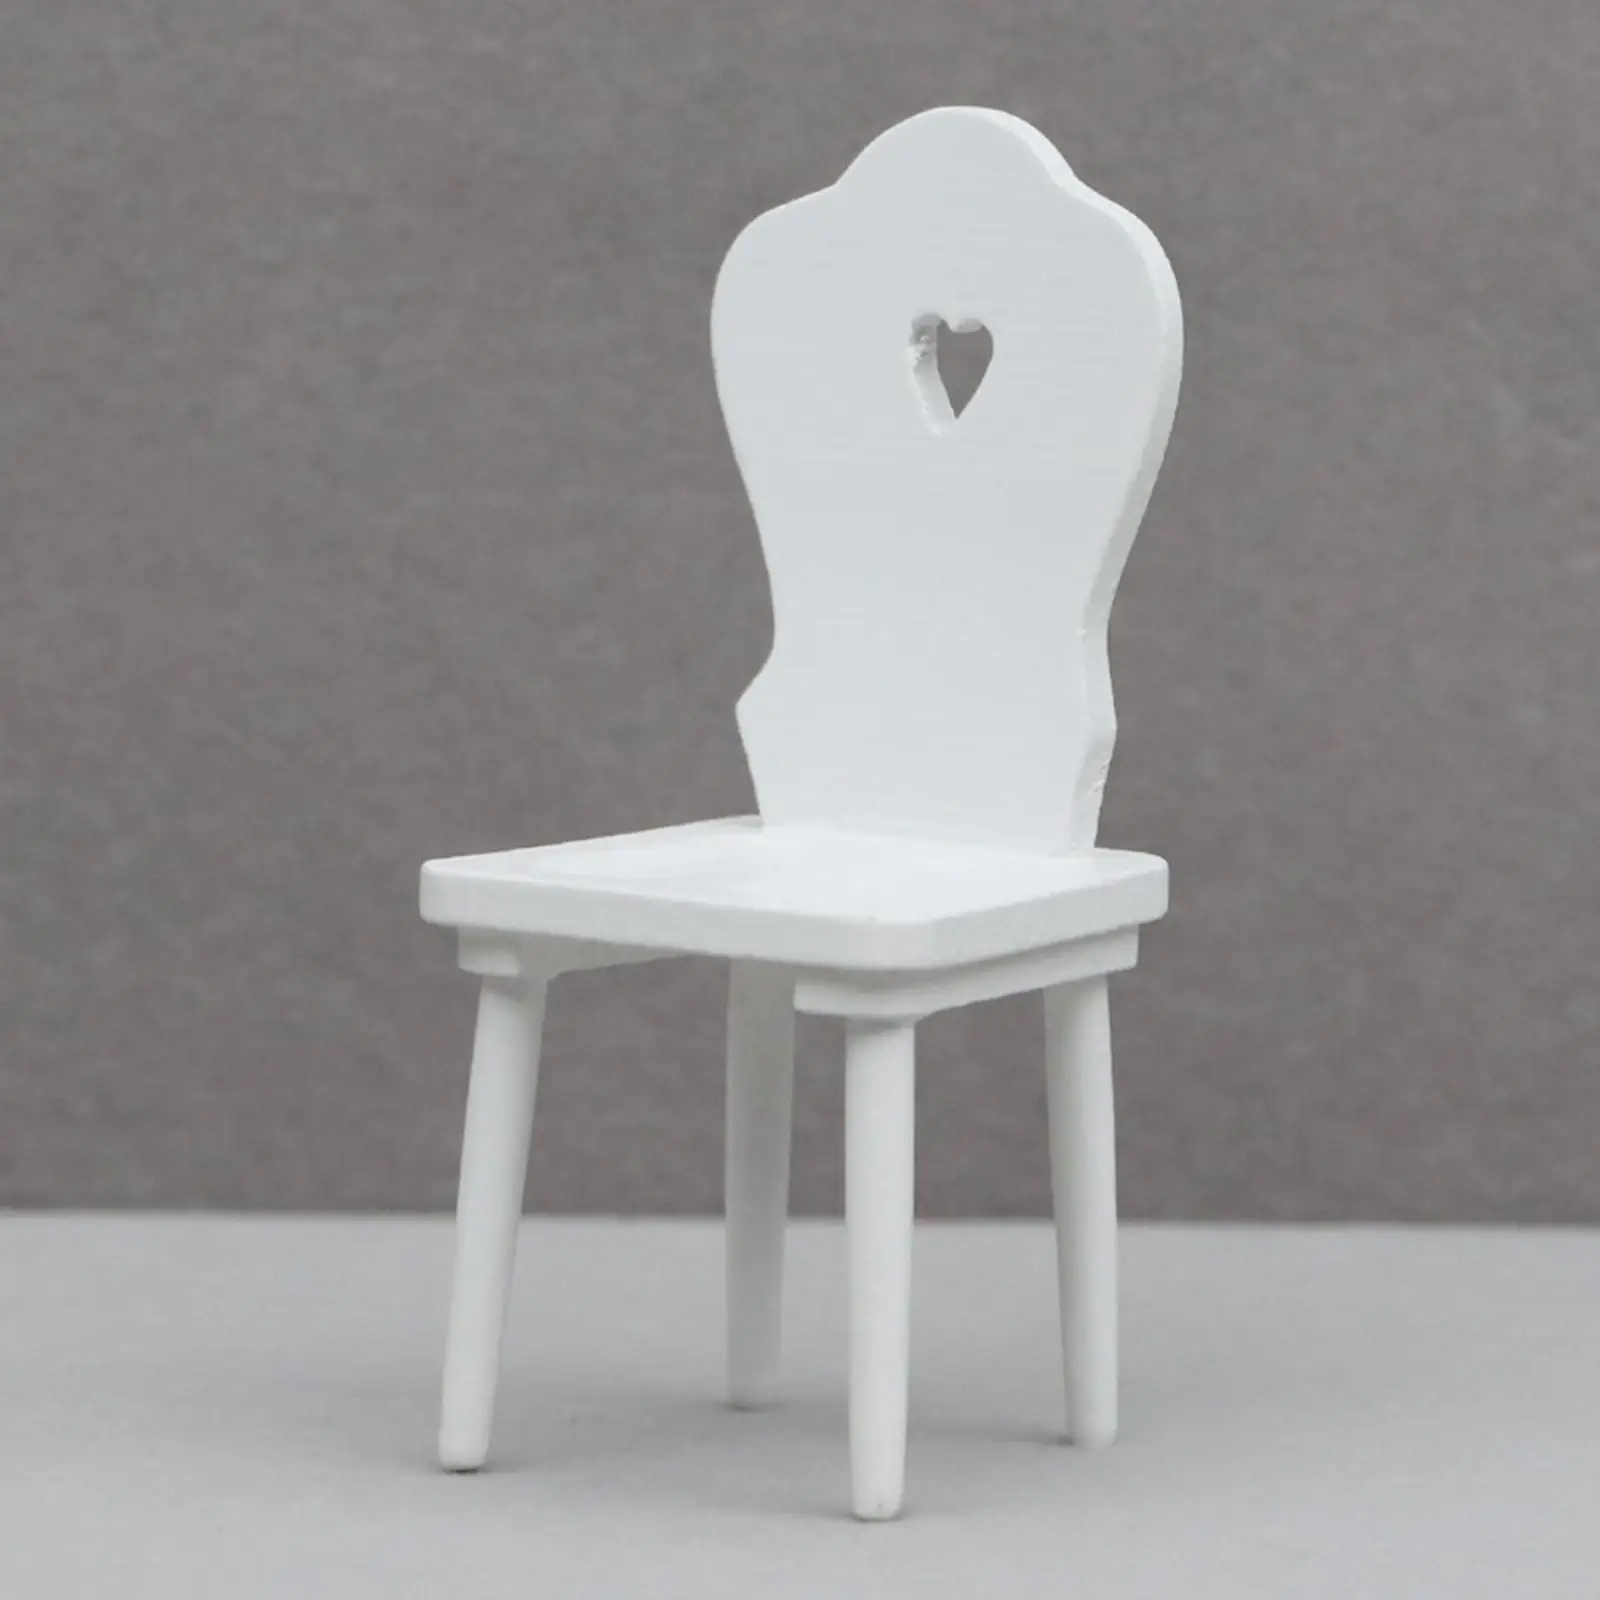 1/12 Miniature Chair Model Dollhouse Decor Dollhouse Mini Chair 1/12 Miniature Chair Ornament for Entrance Hall Living Room